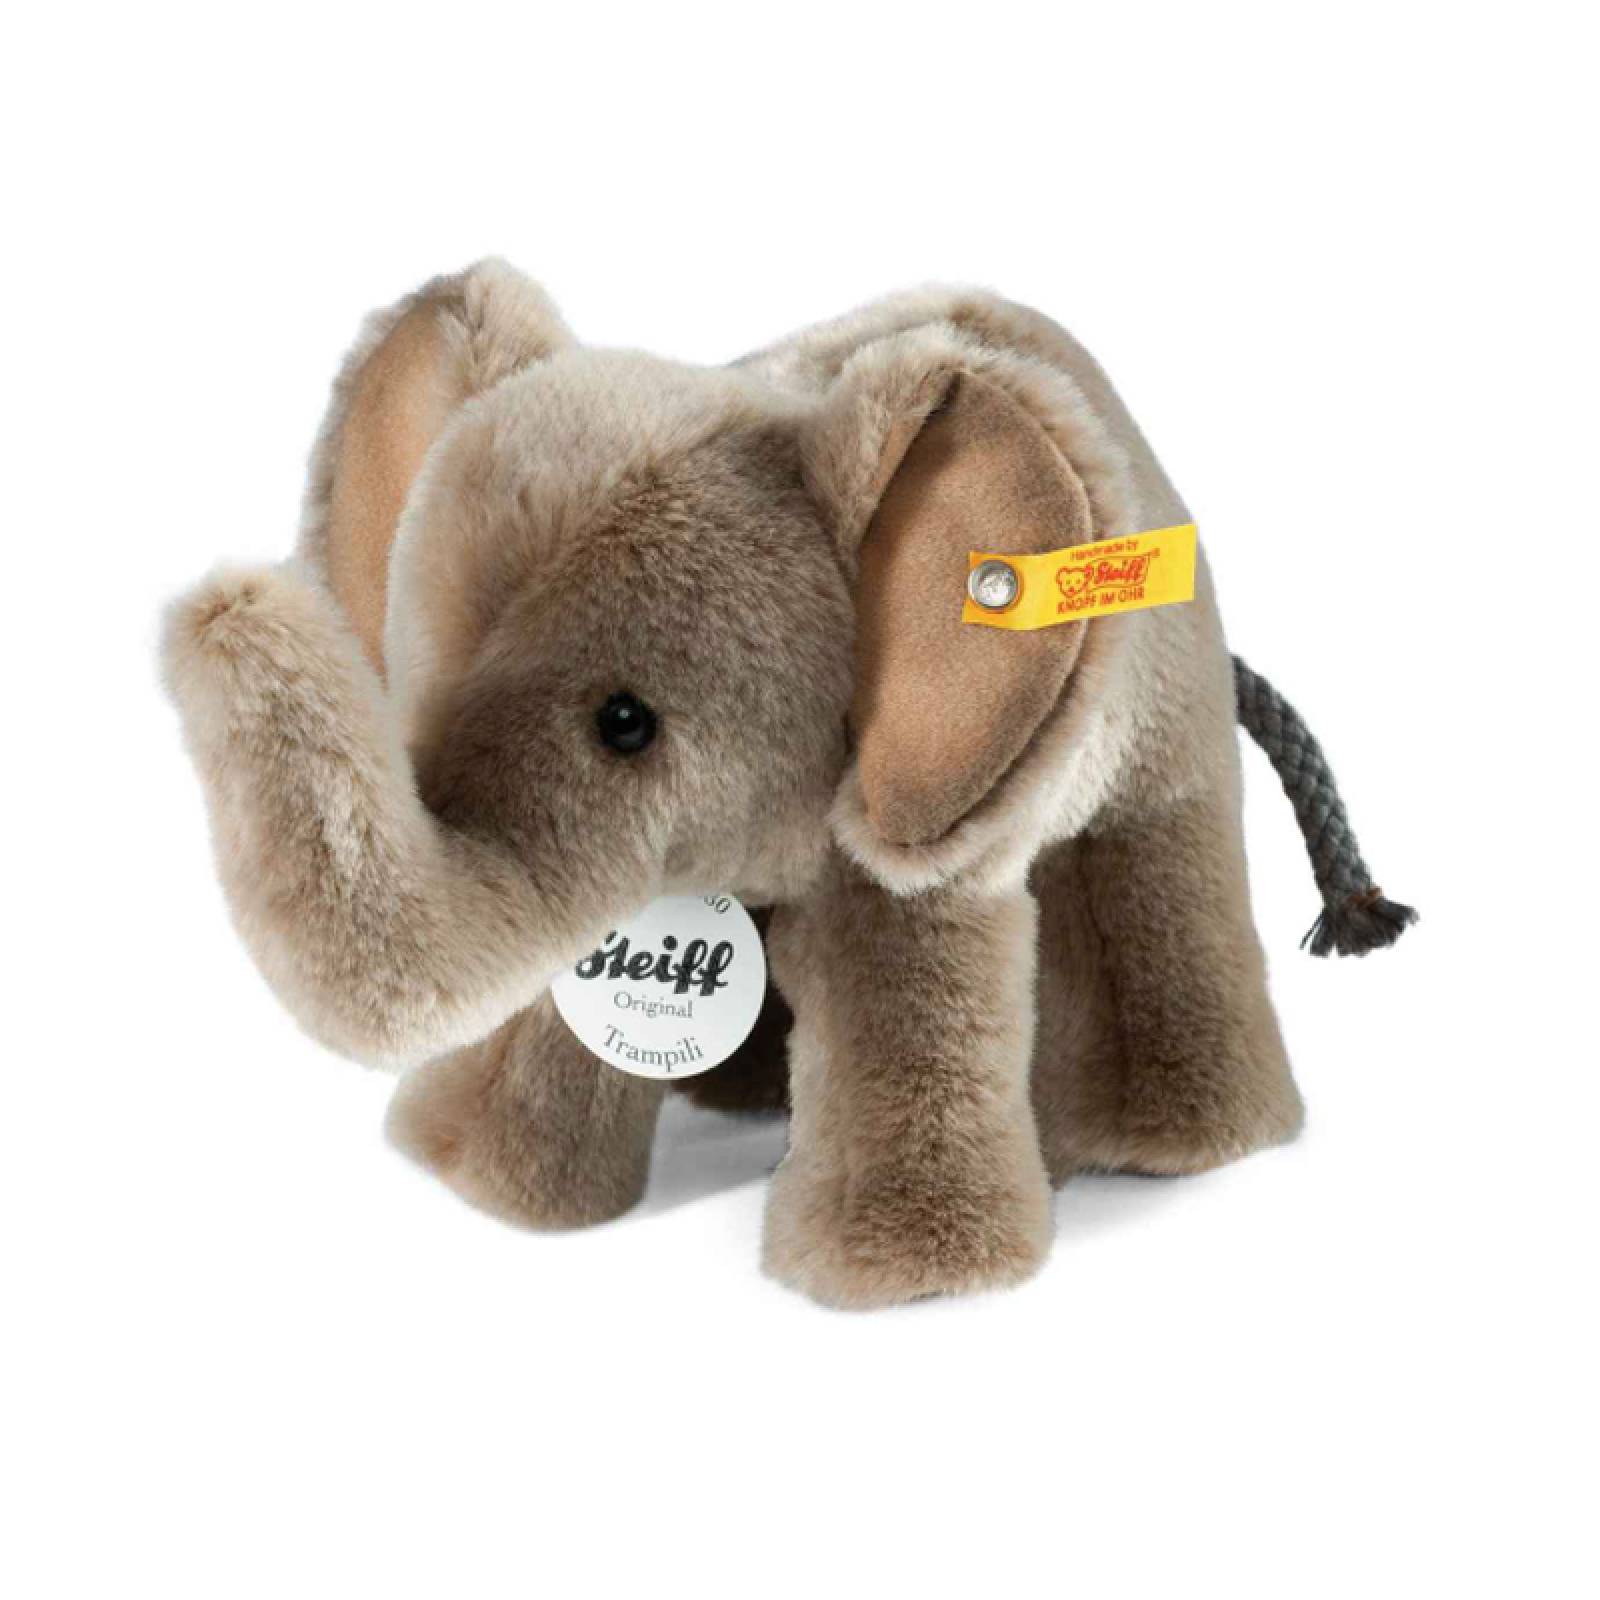 Trampili Elephant Soft Toy by Steiff 0+